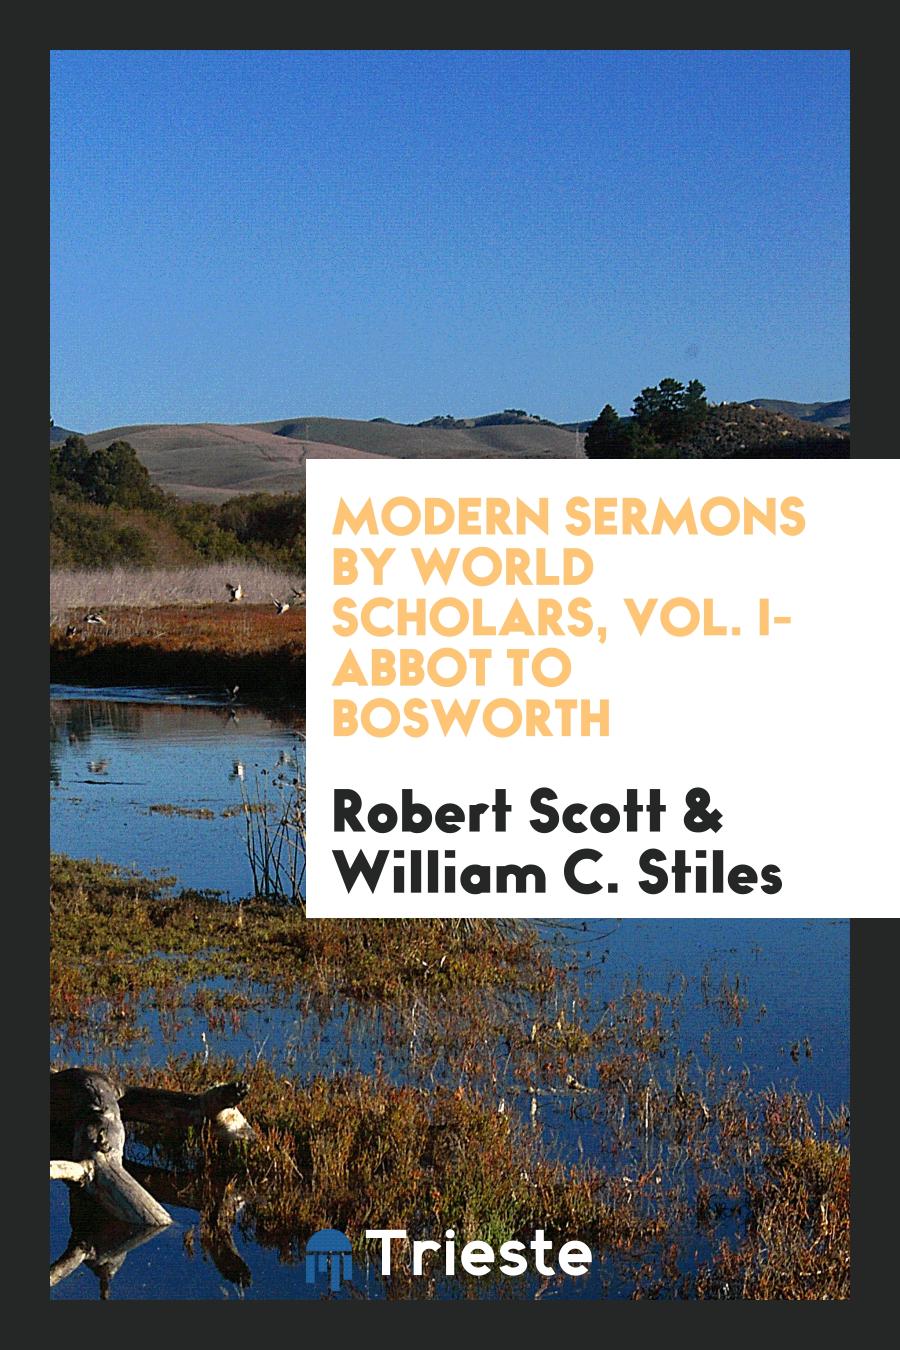 Modern sermons by world scholars, Vol. I-Abbot to Bosworth